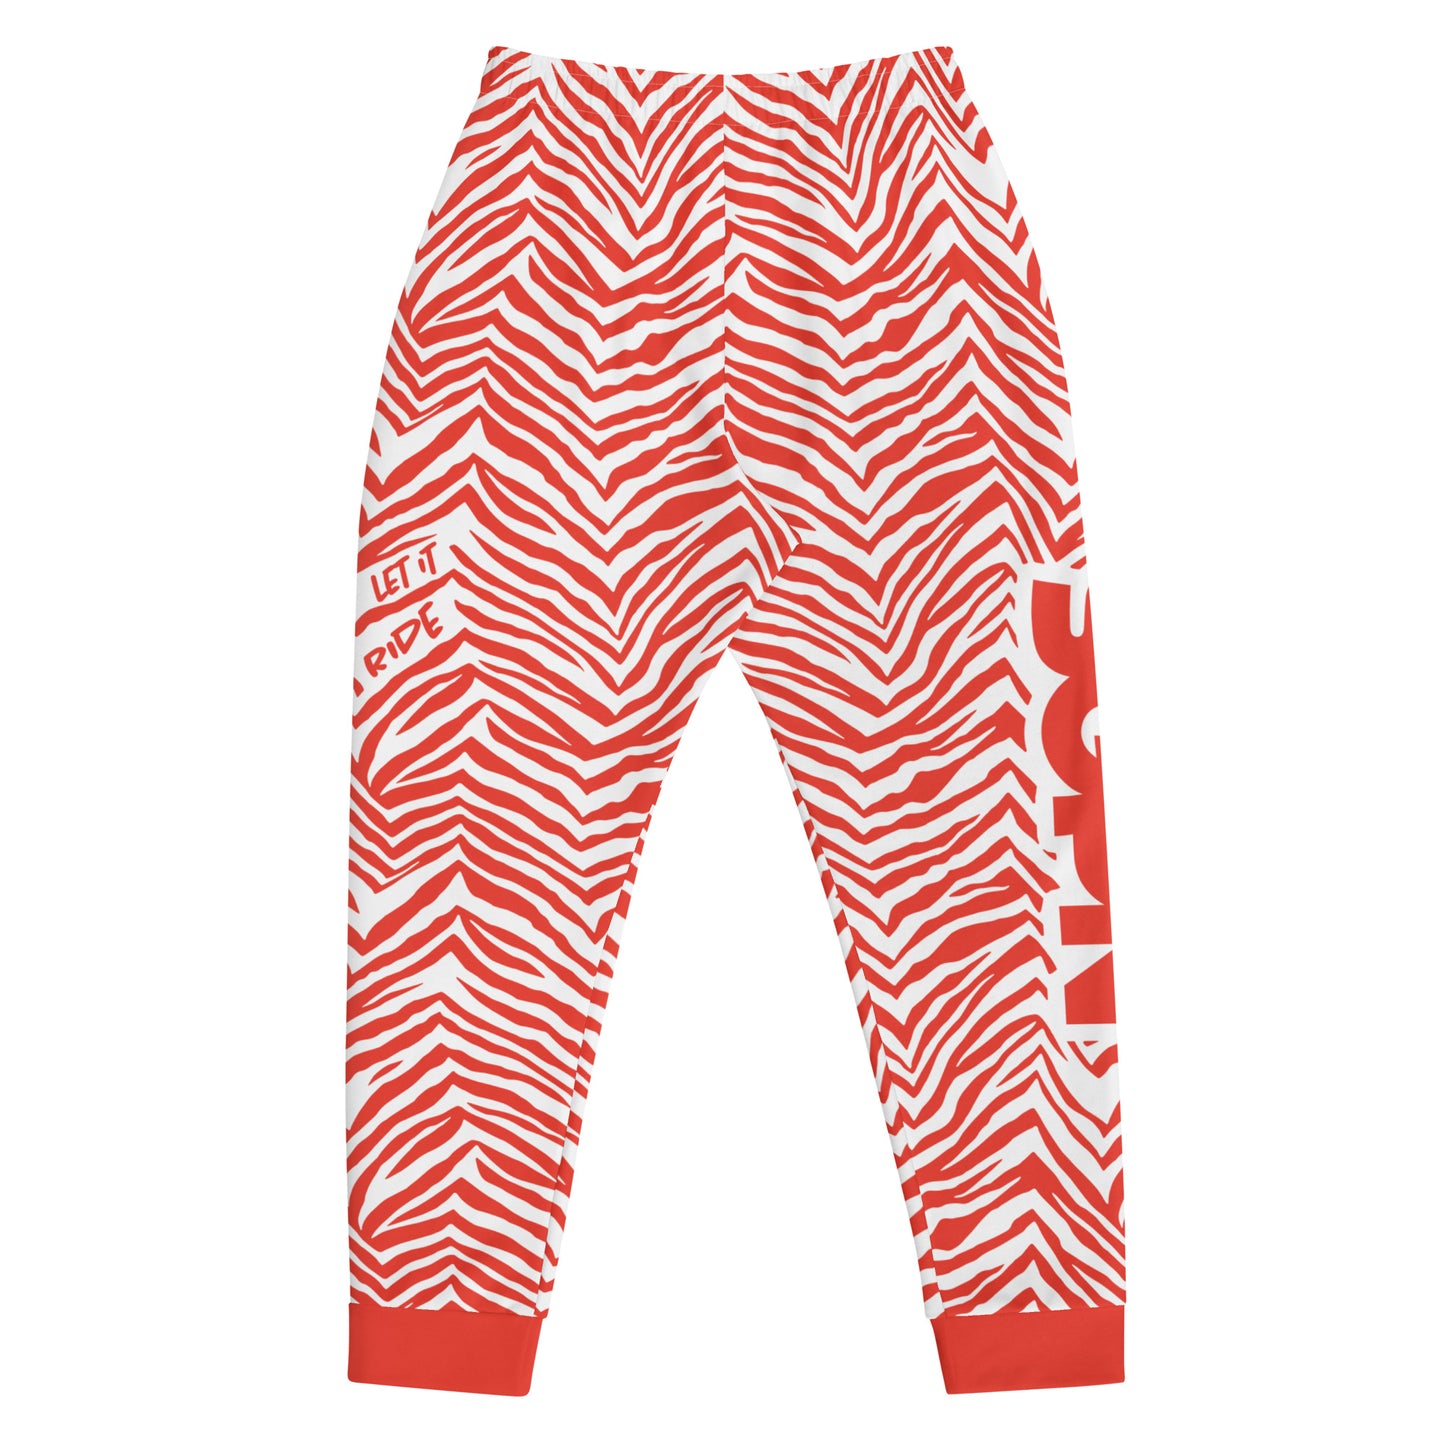 SGPN - Let it Ride - Zebra Stripe Men's Joggers (Red)